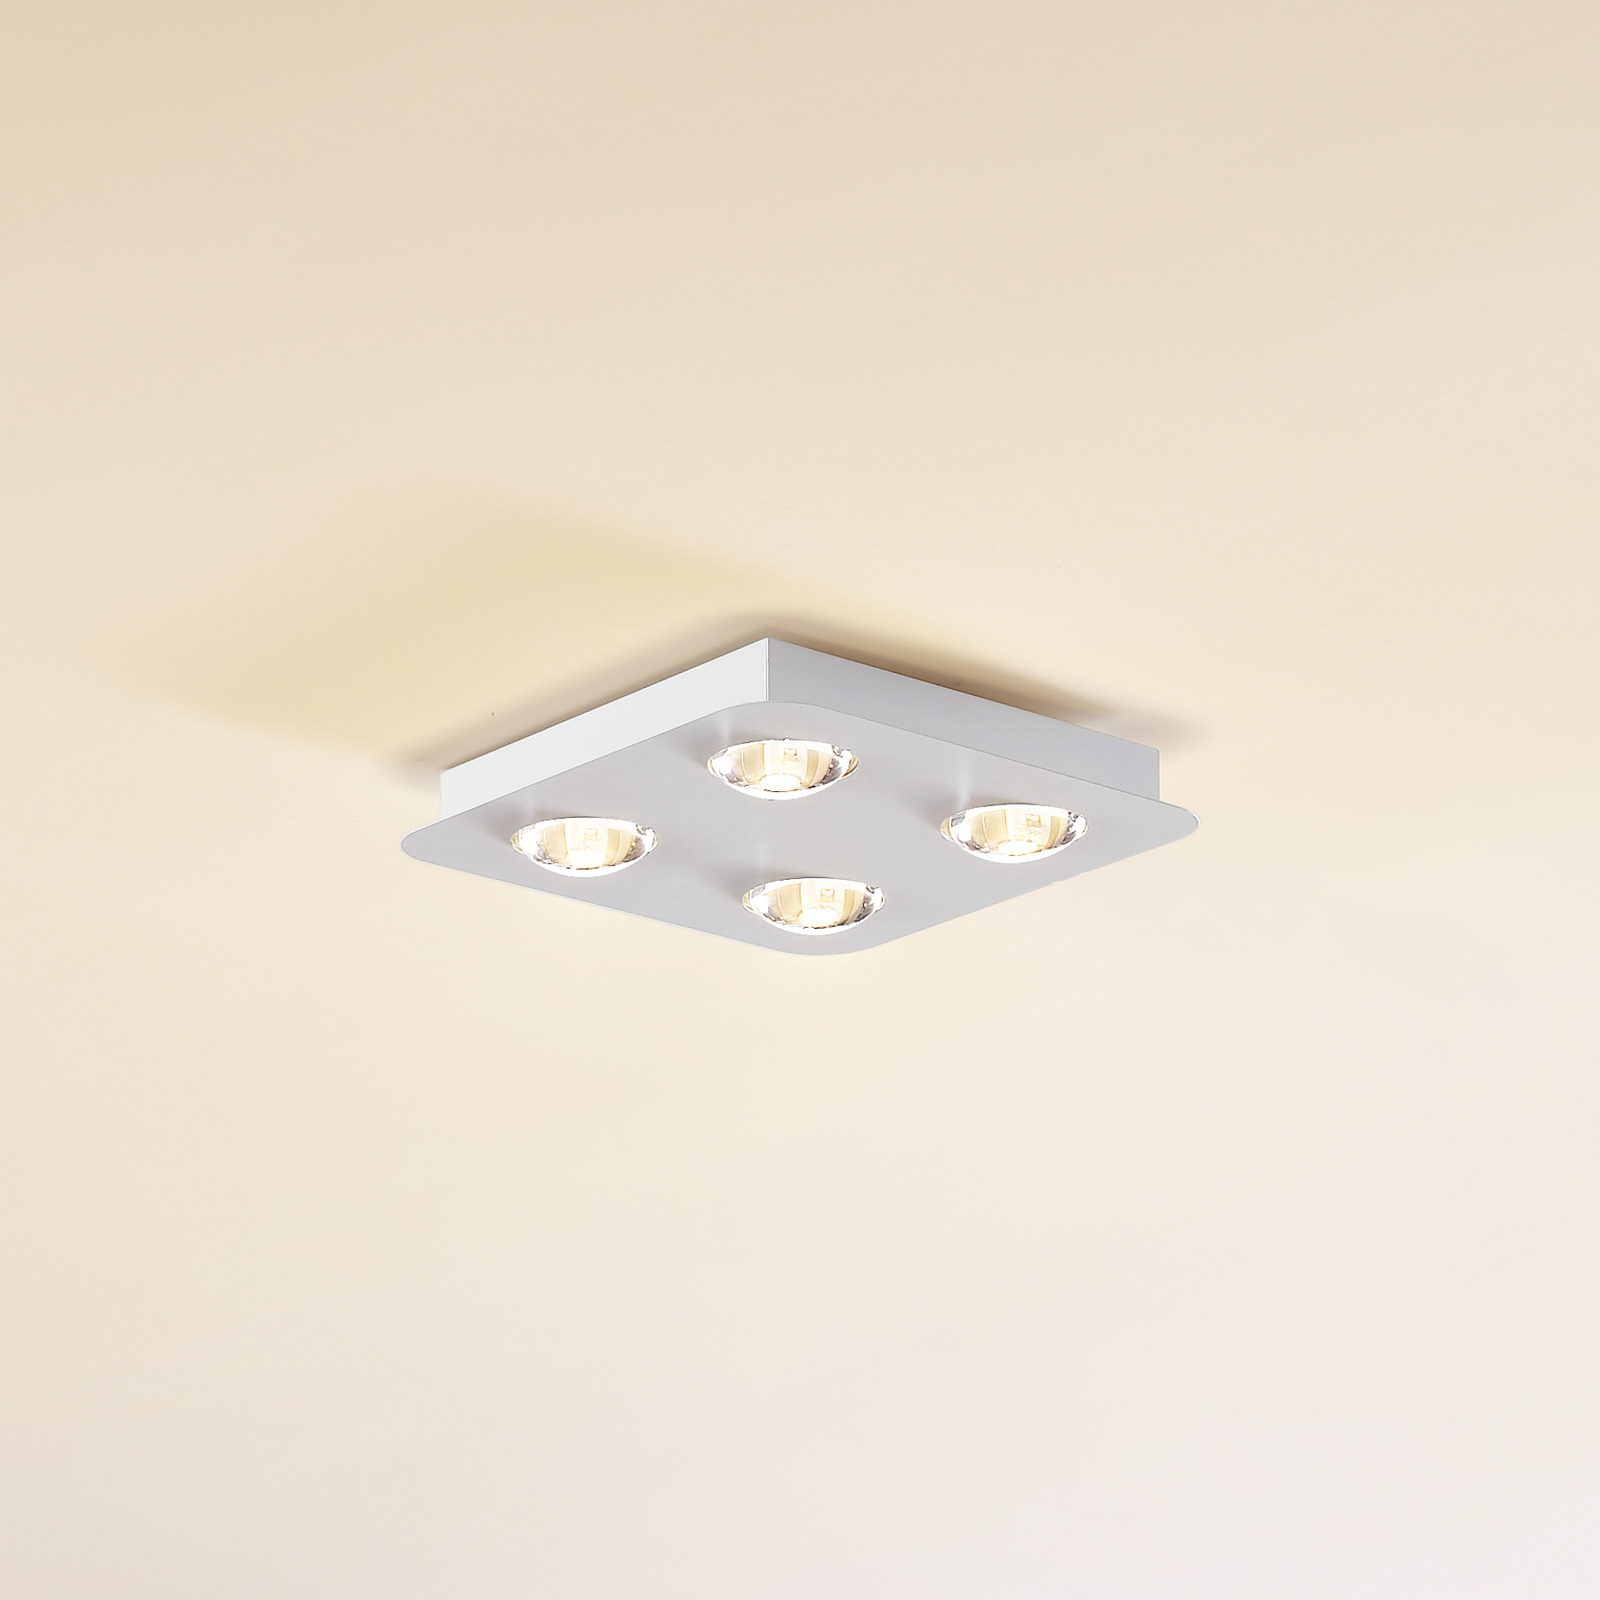 Lindby LED plafonnier, 25 x 25 cm, blanc mat